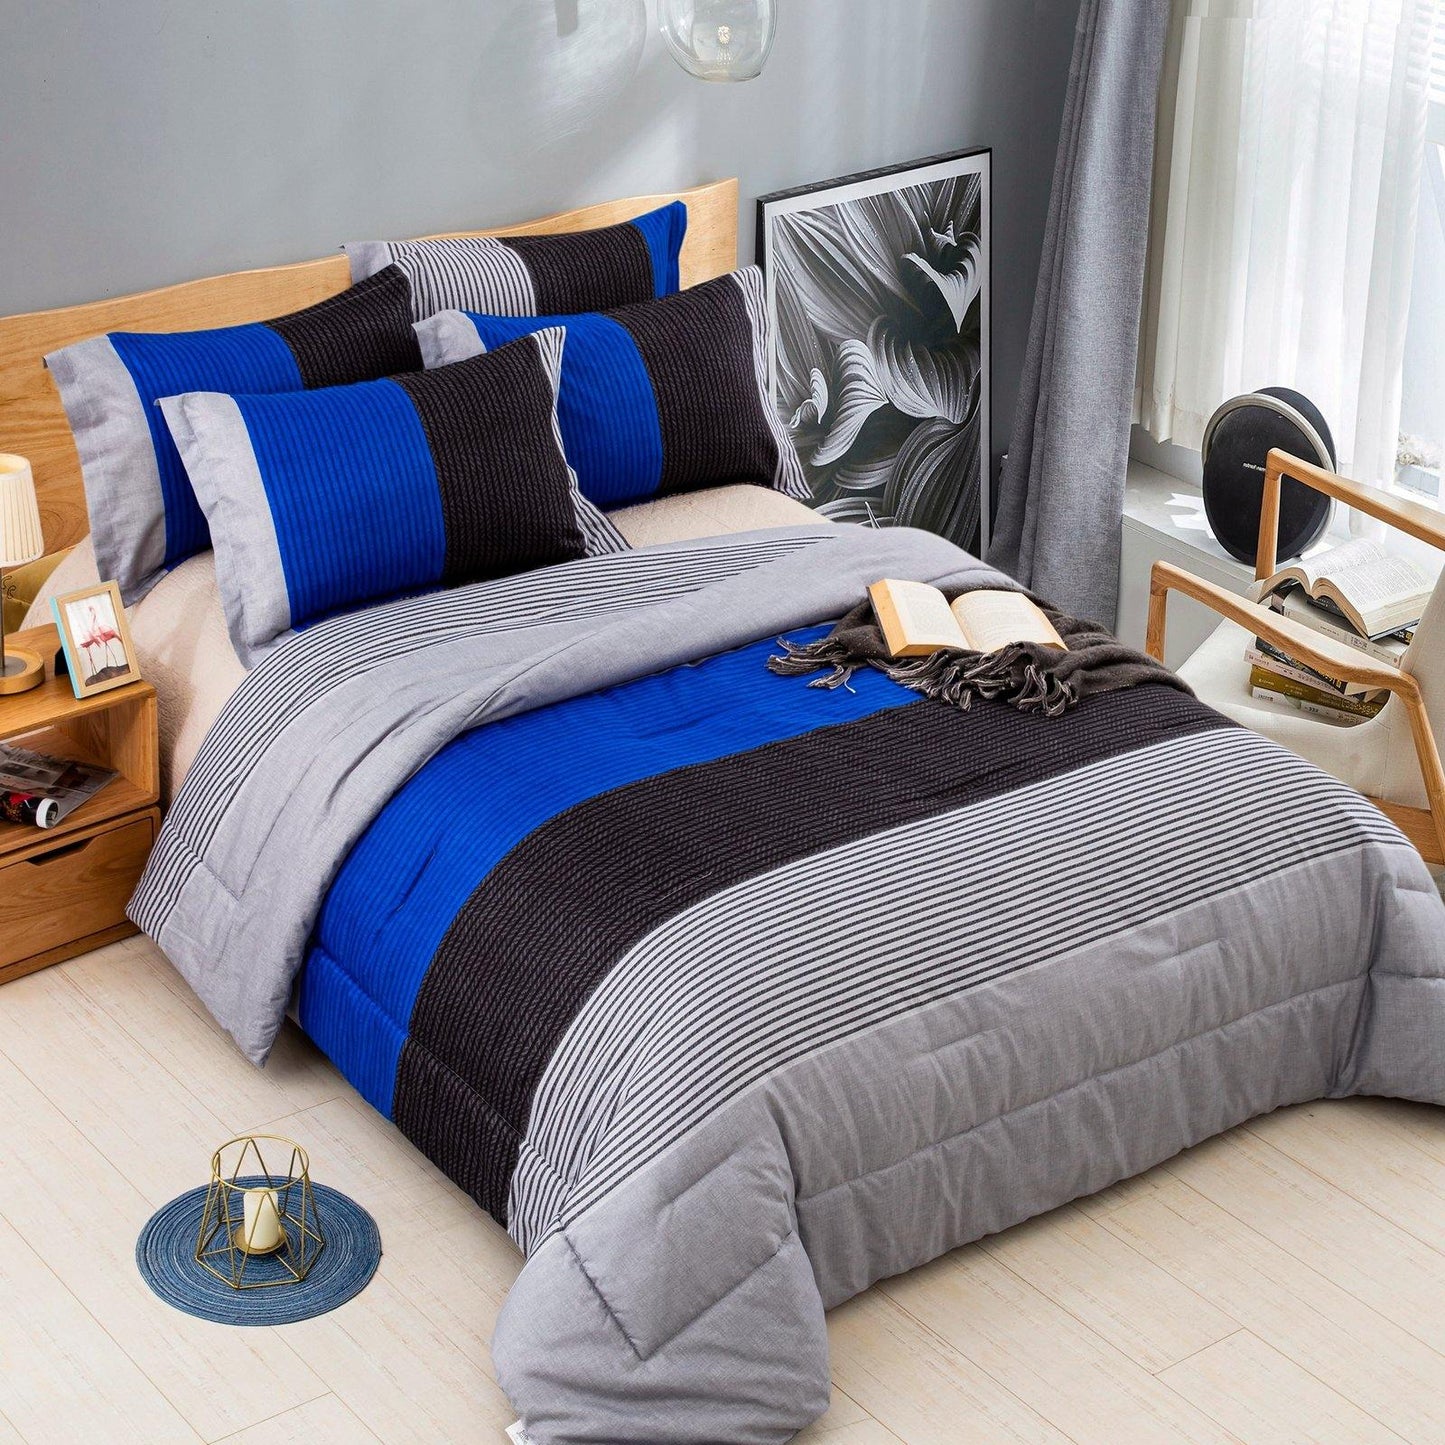 WONGS BEDDING Gray and blue Comforter set 3 Pieces Bedding Comforter with 2 Pillow Cases - Wongs bedding